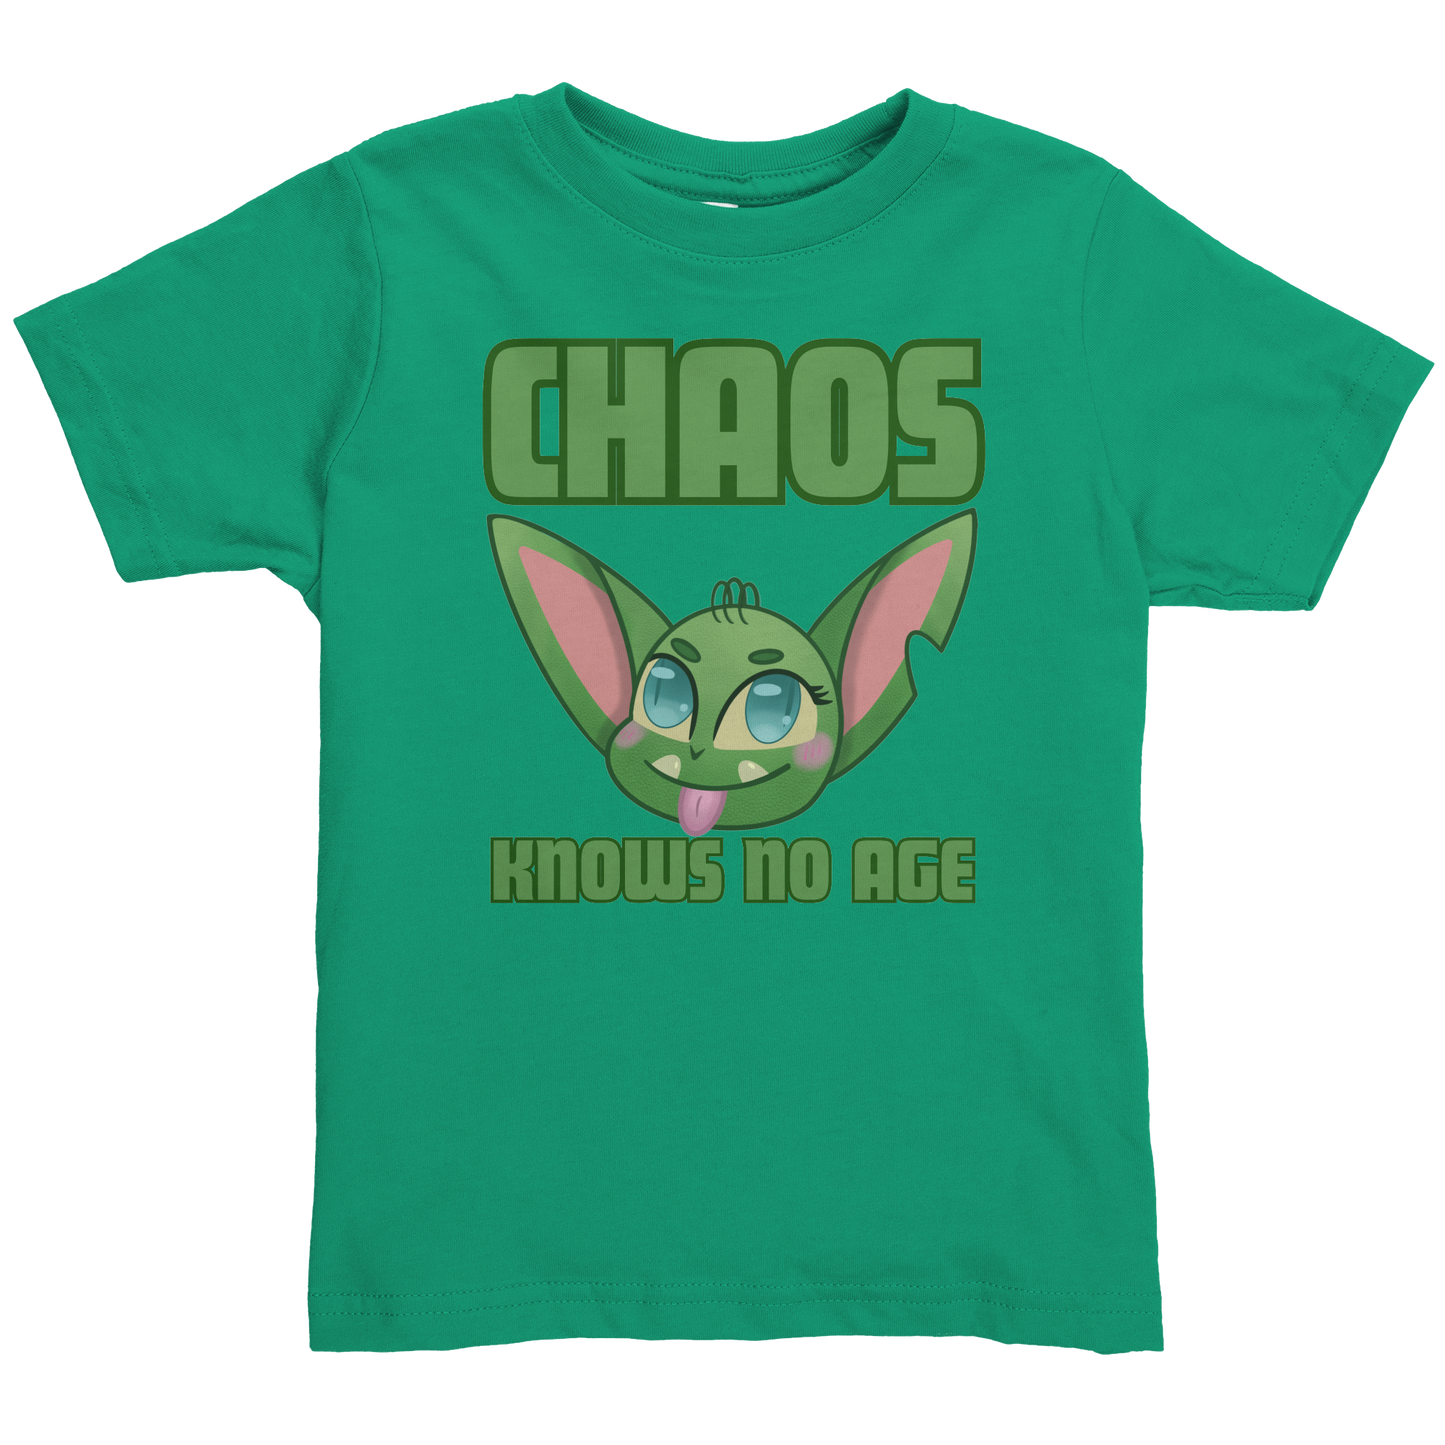 Chaos Knows No Age Toddler T-Shirt